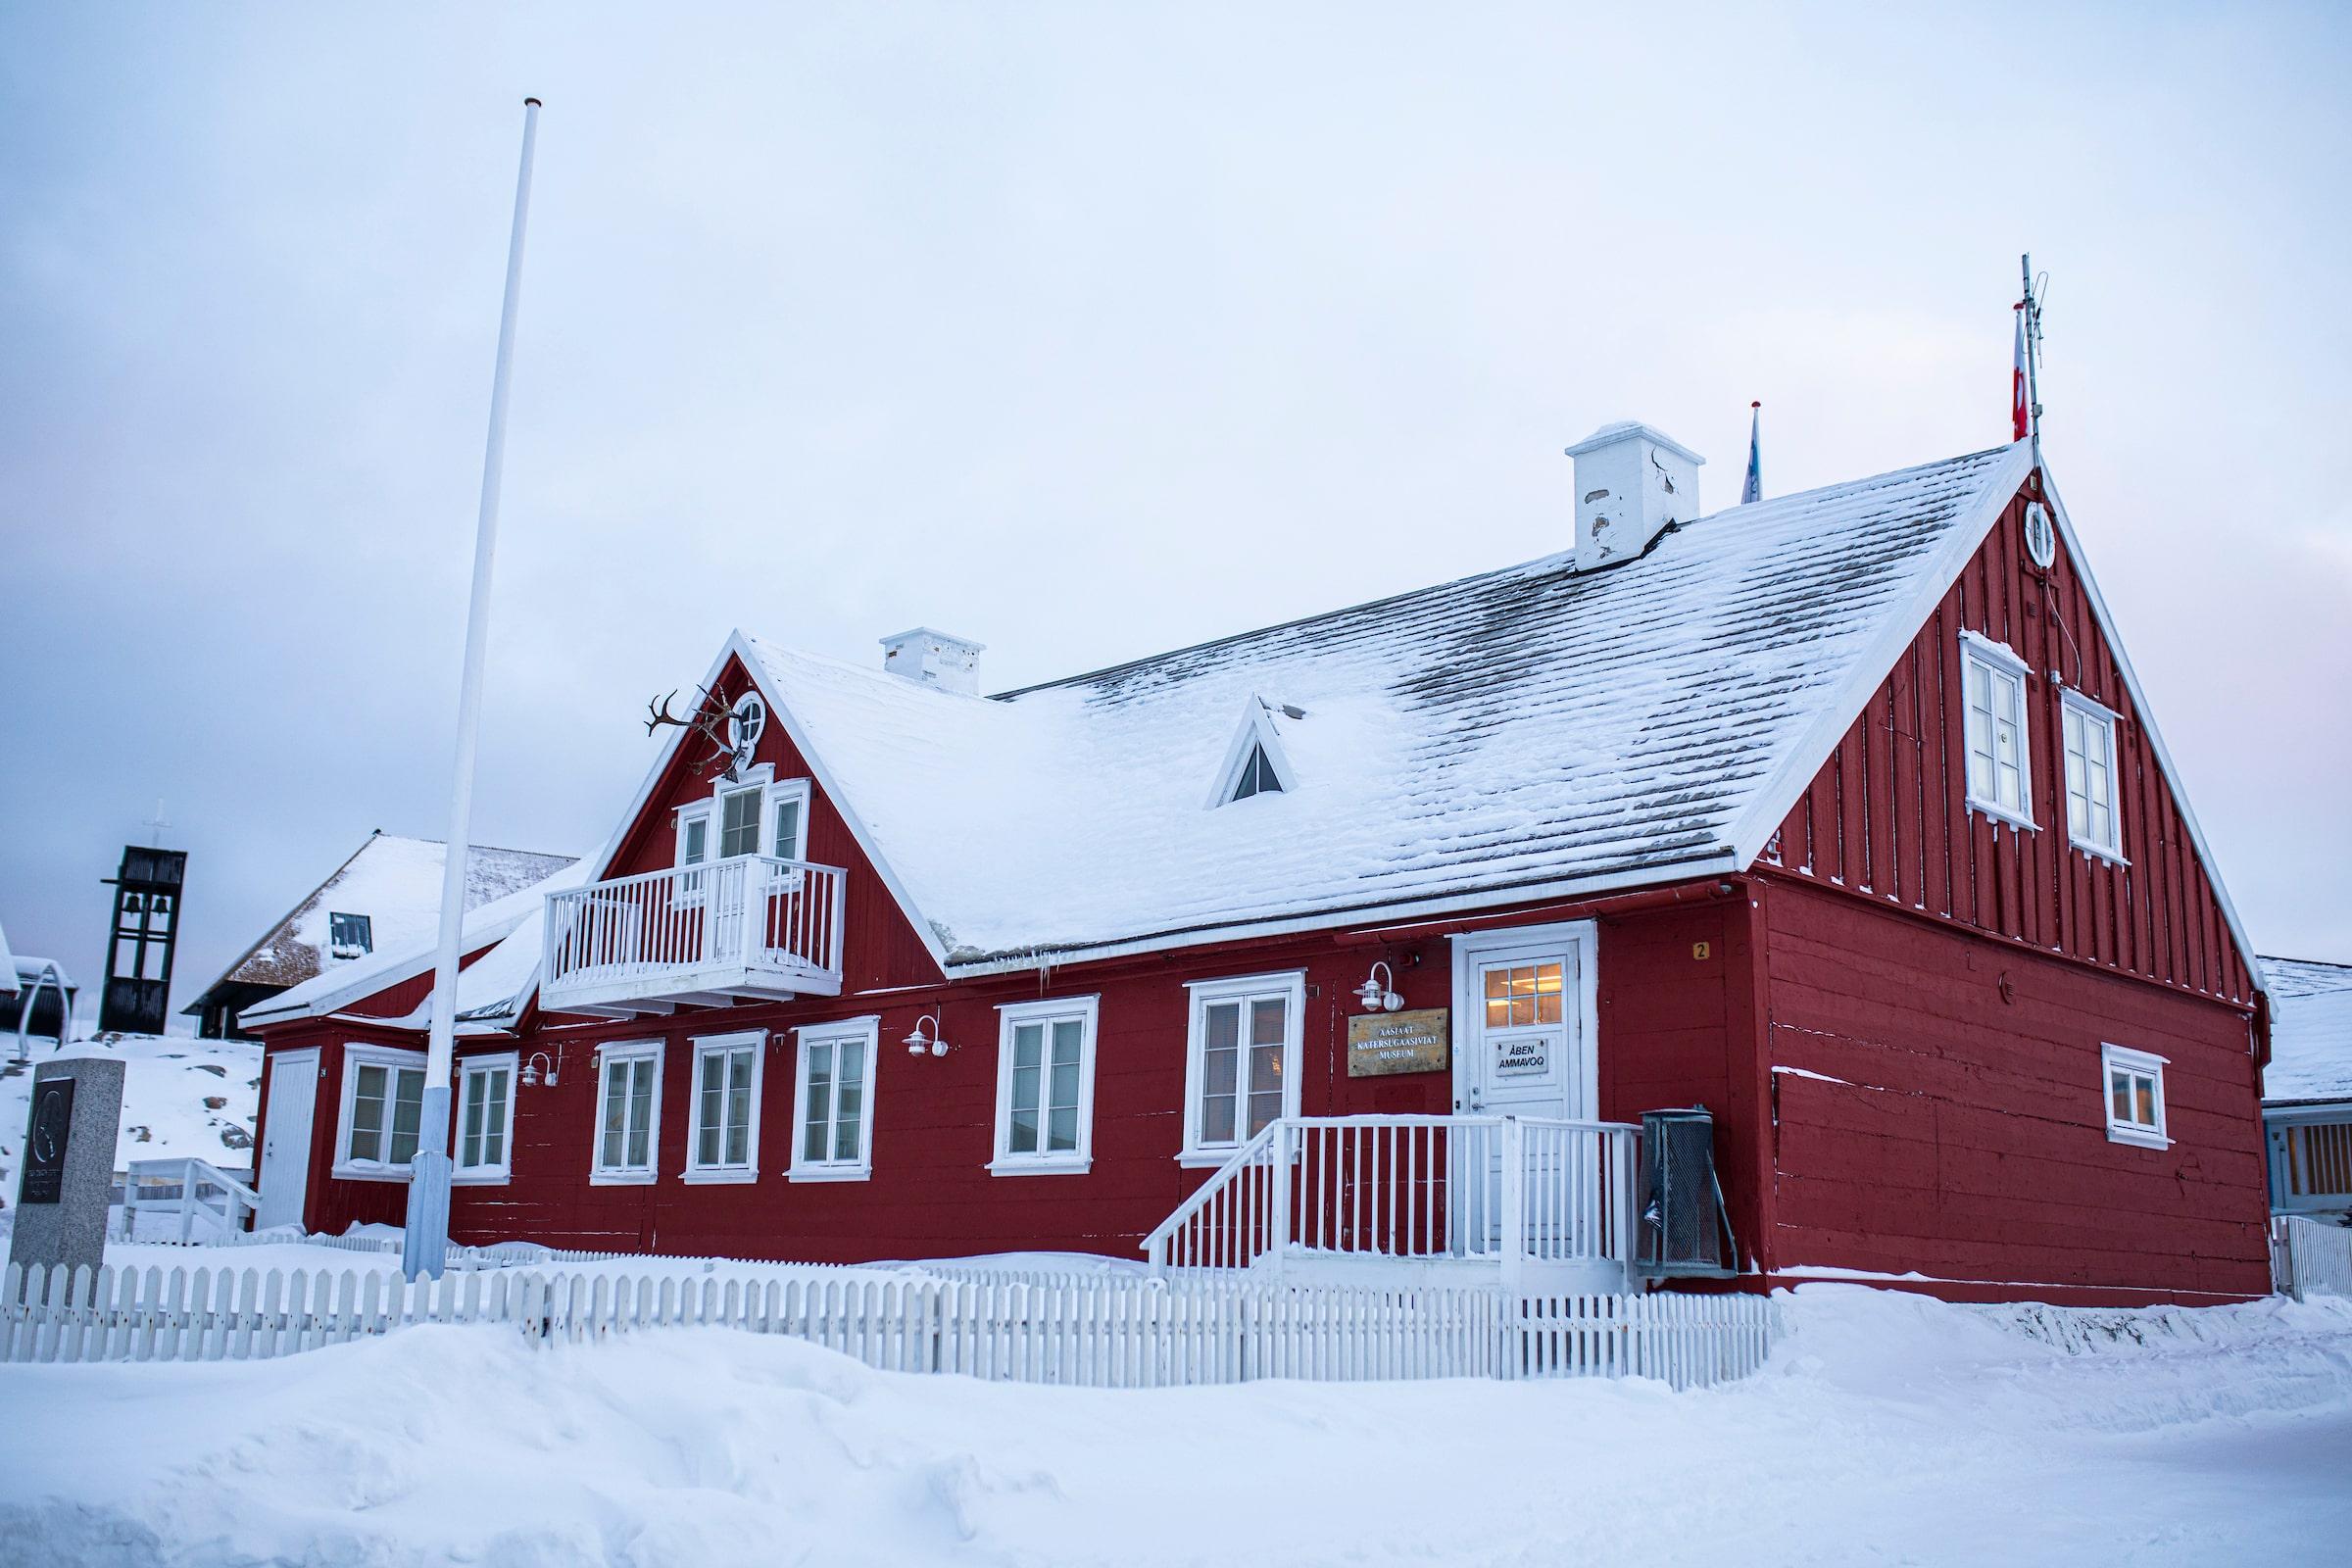 Aasiaat Museum. Photo - Aningaaq R. Carlsen, Visit Greenland